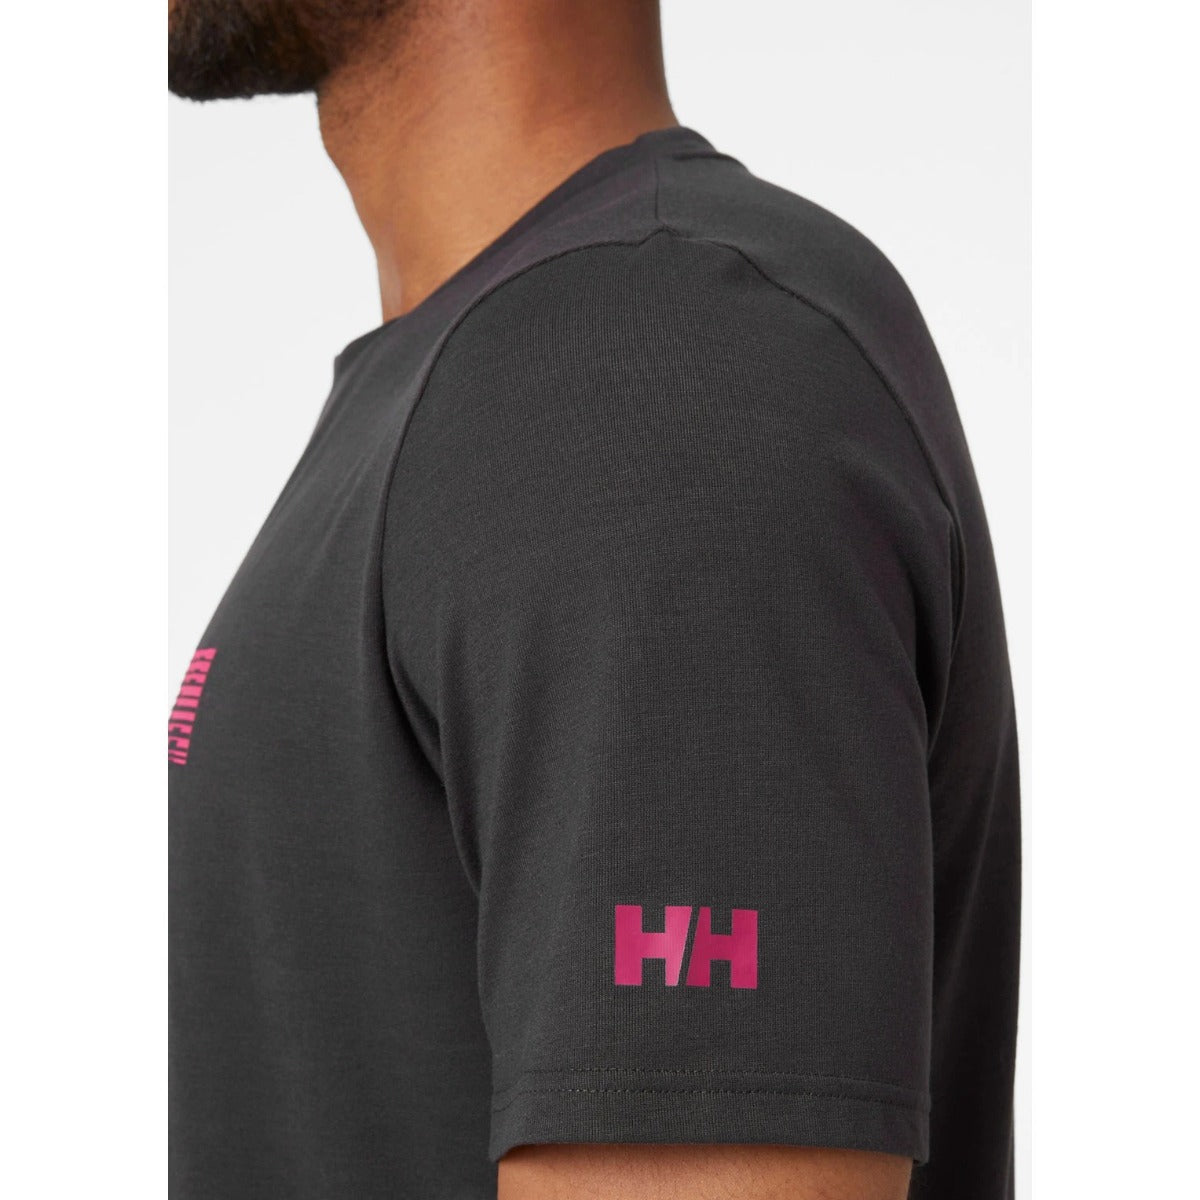 Helly Hansen HP Racing Quick Dry T-shirt Men's (Black 982)